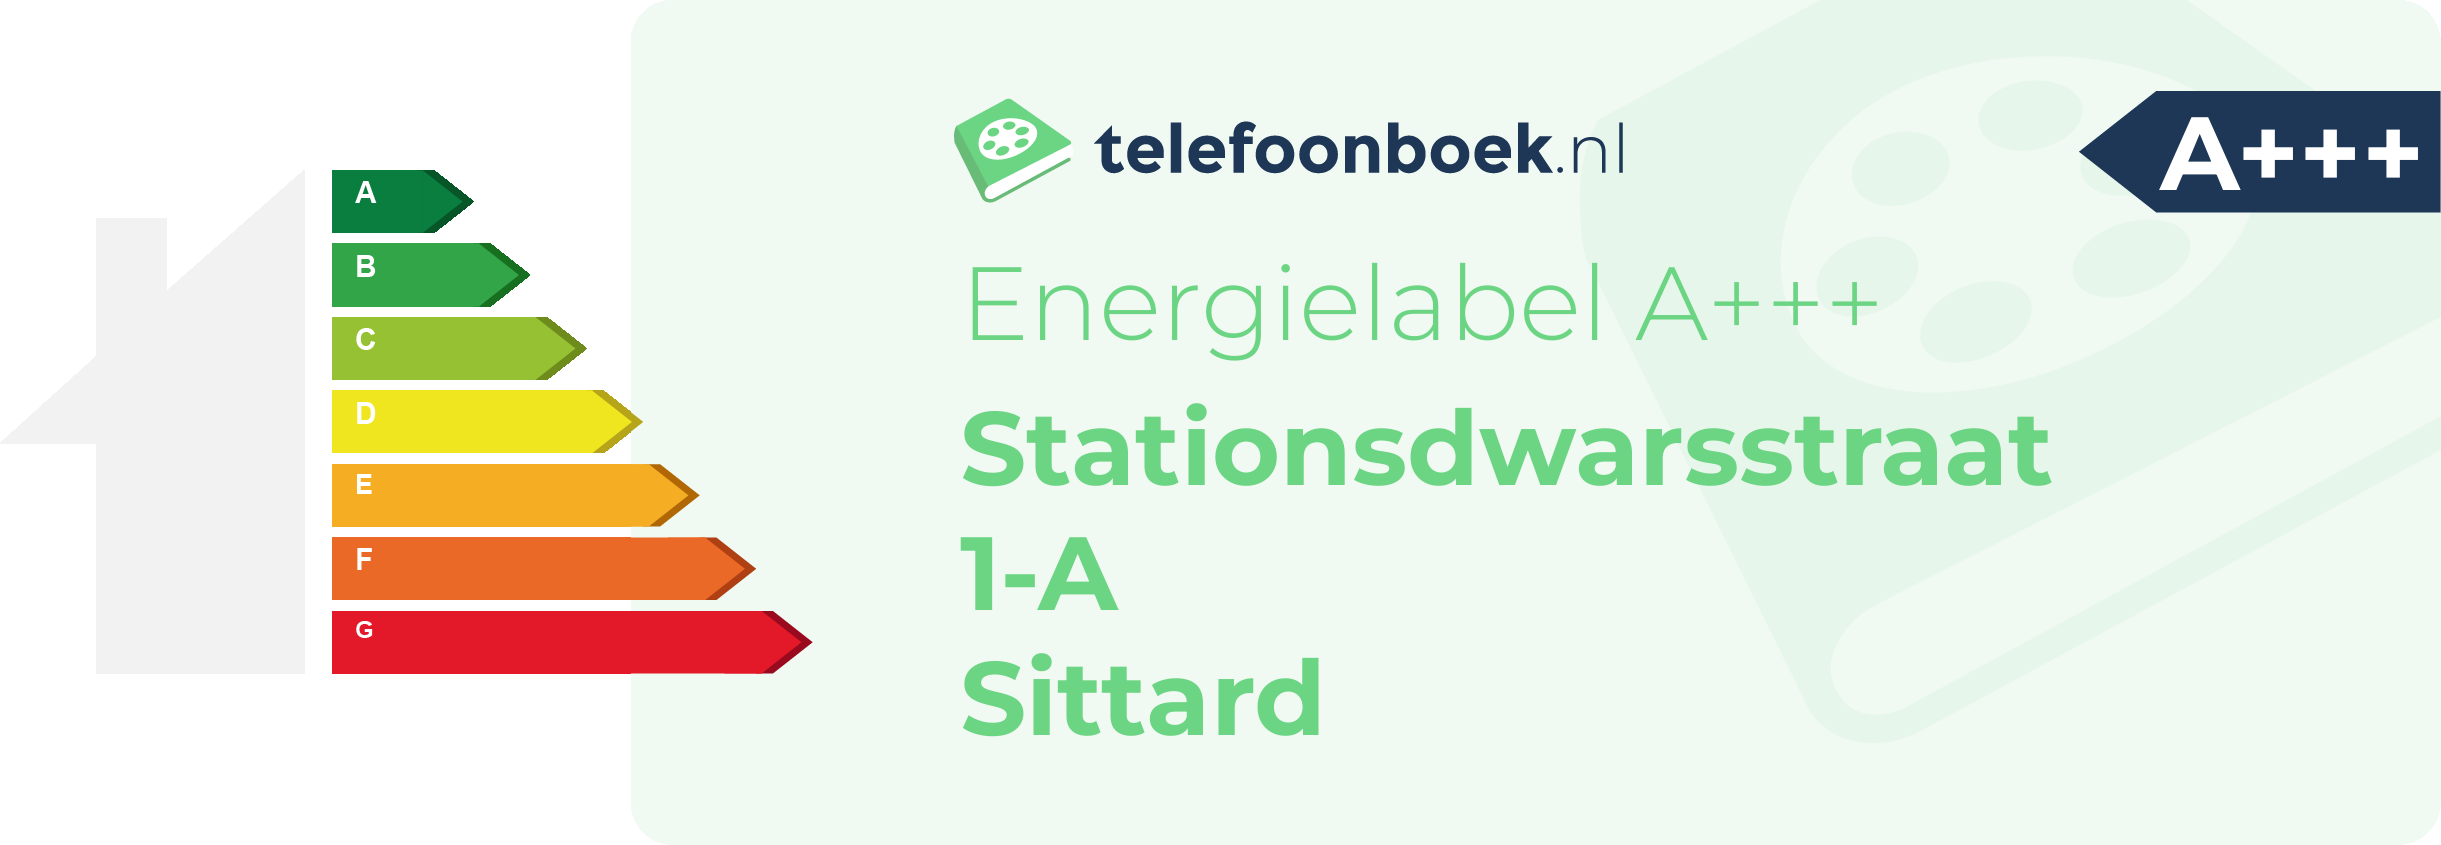 Energielabel Stationsdwarsstraat 1-A Sittard